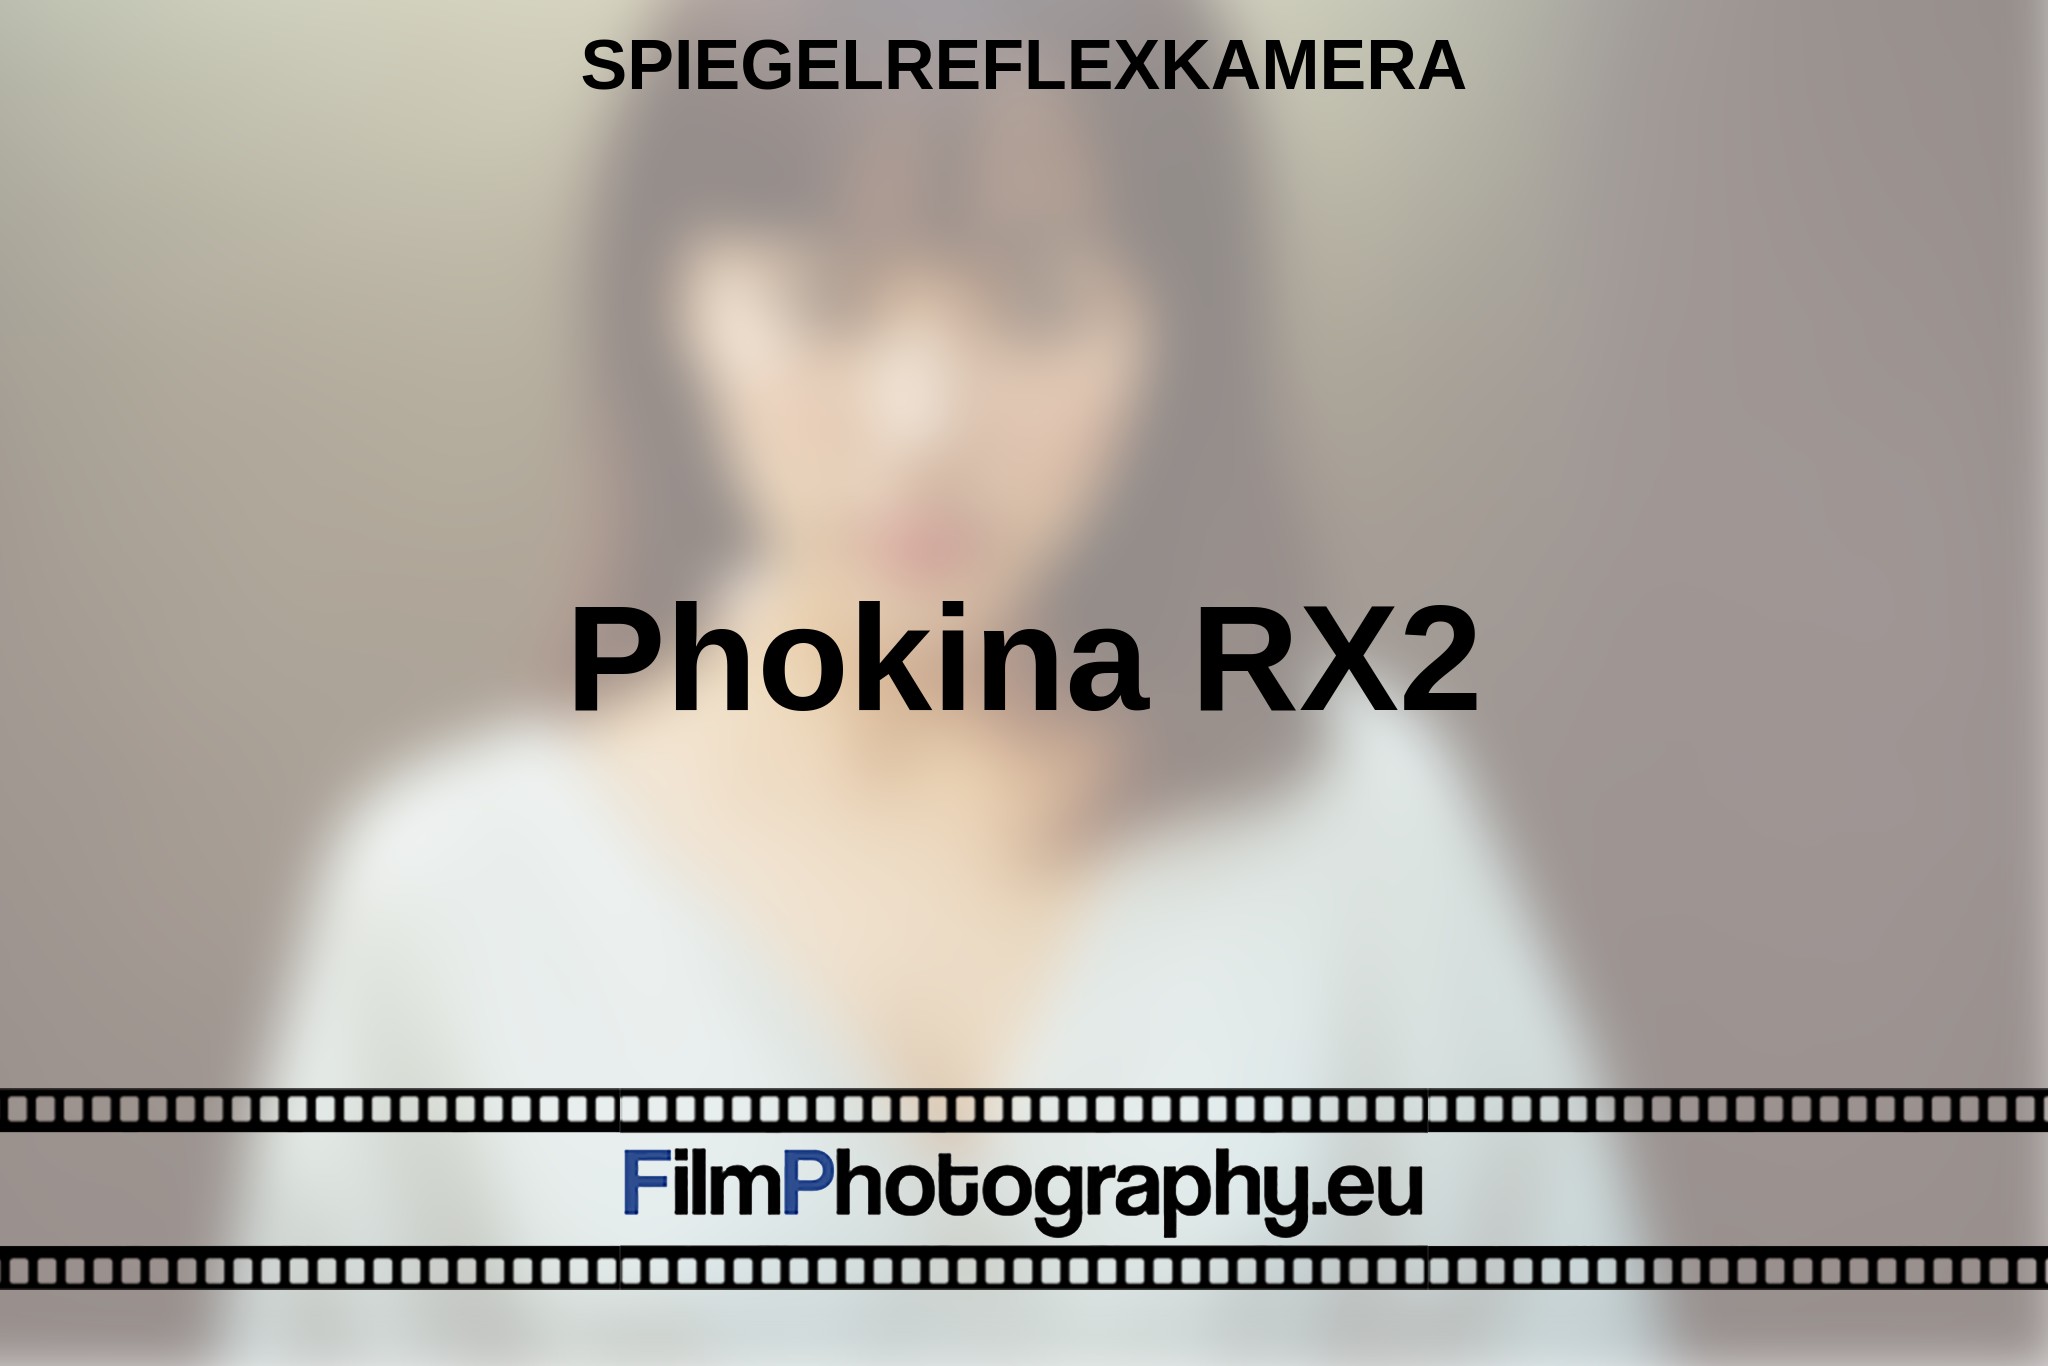 phokina-rx2-spiegelreflexkamera-bnv.jpg